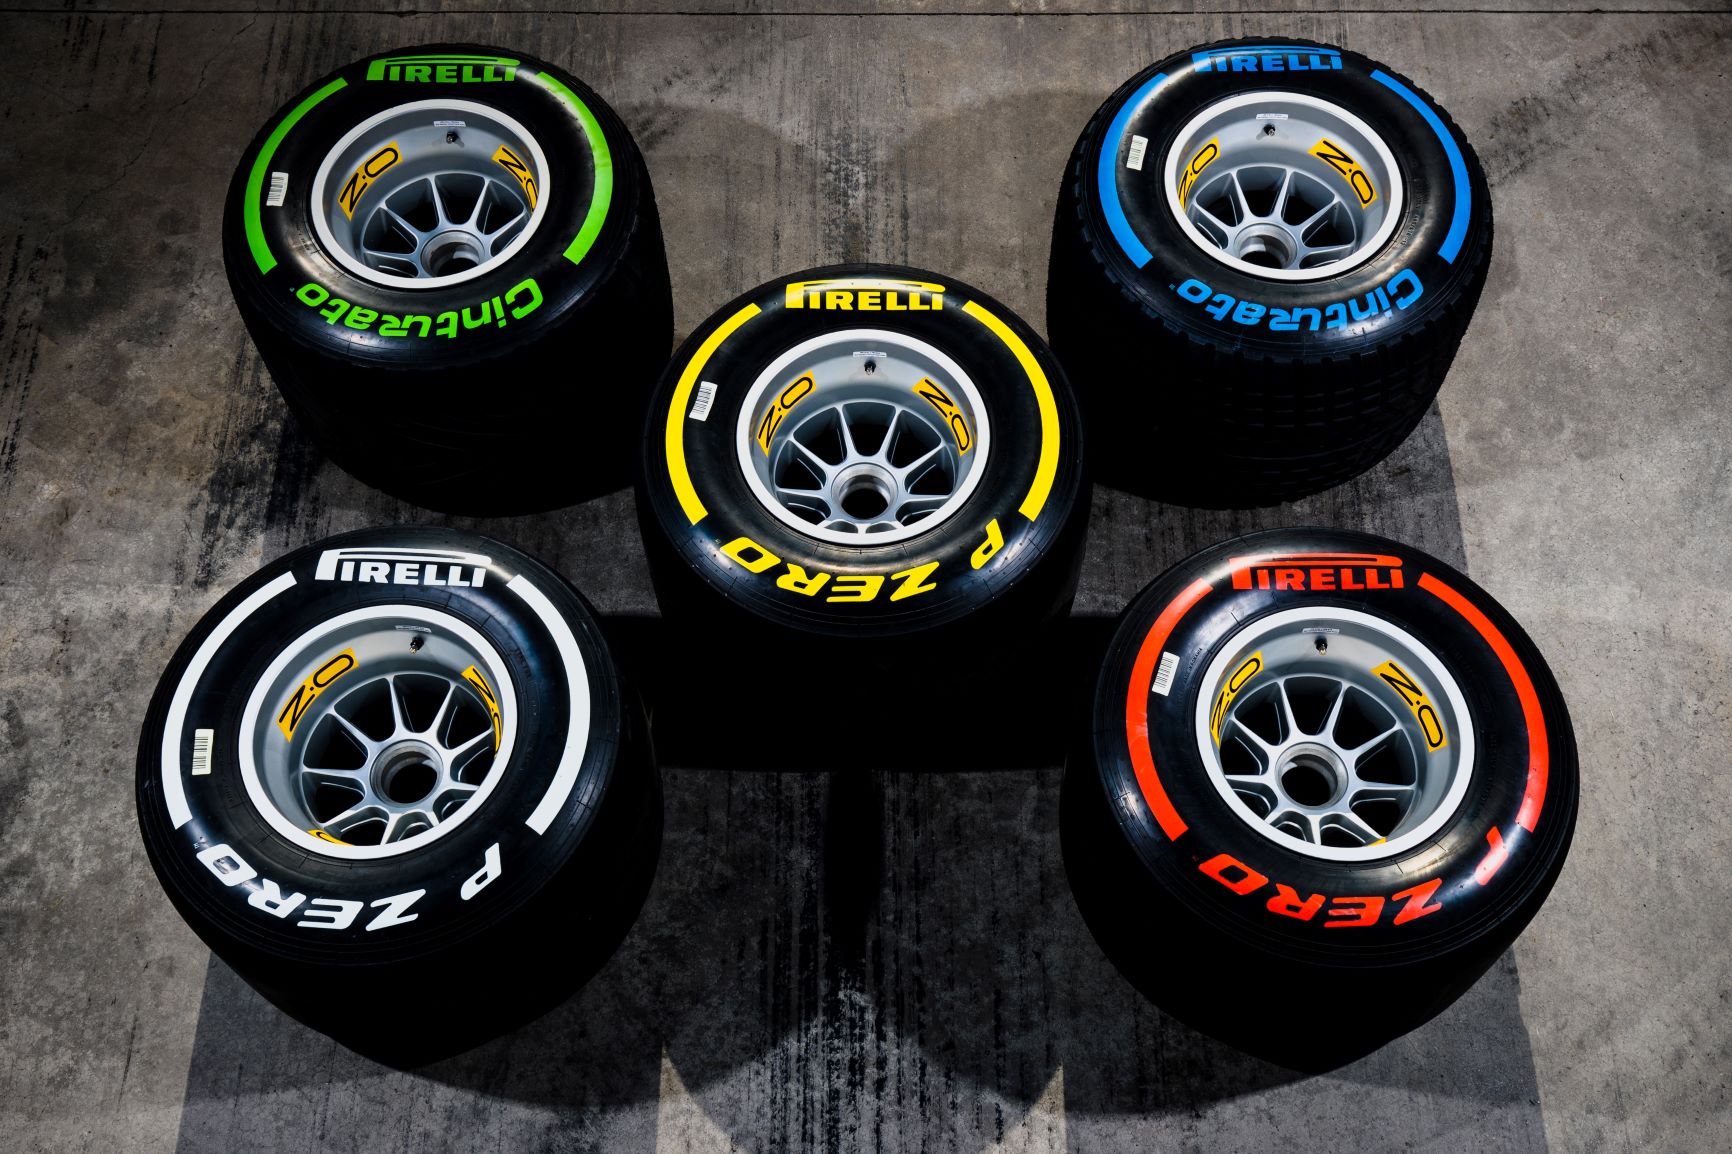 Pirelli tyres 2019.